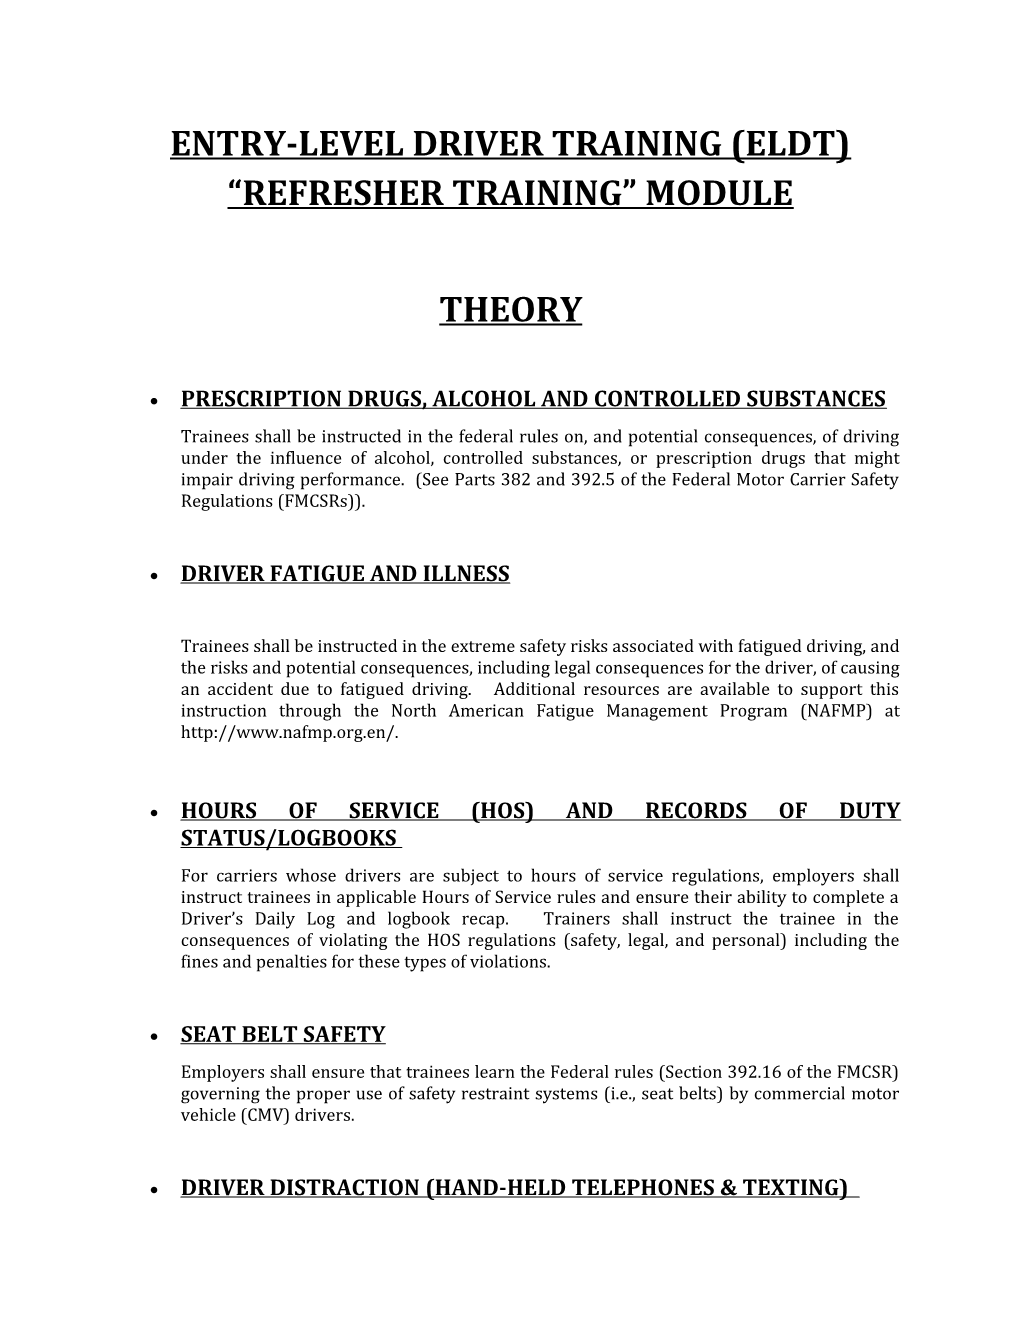 Entry-Level Driver Training (Eldt) Refresher Training Module